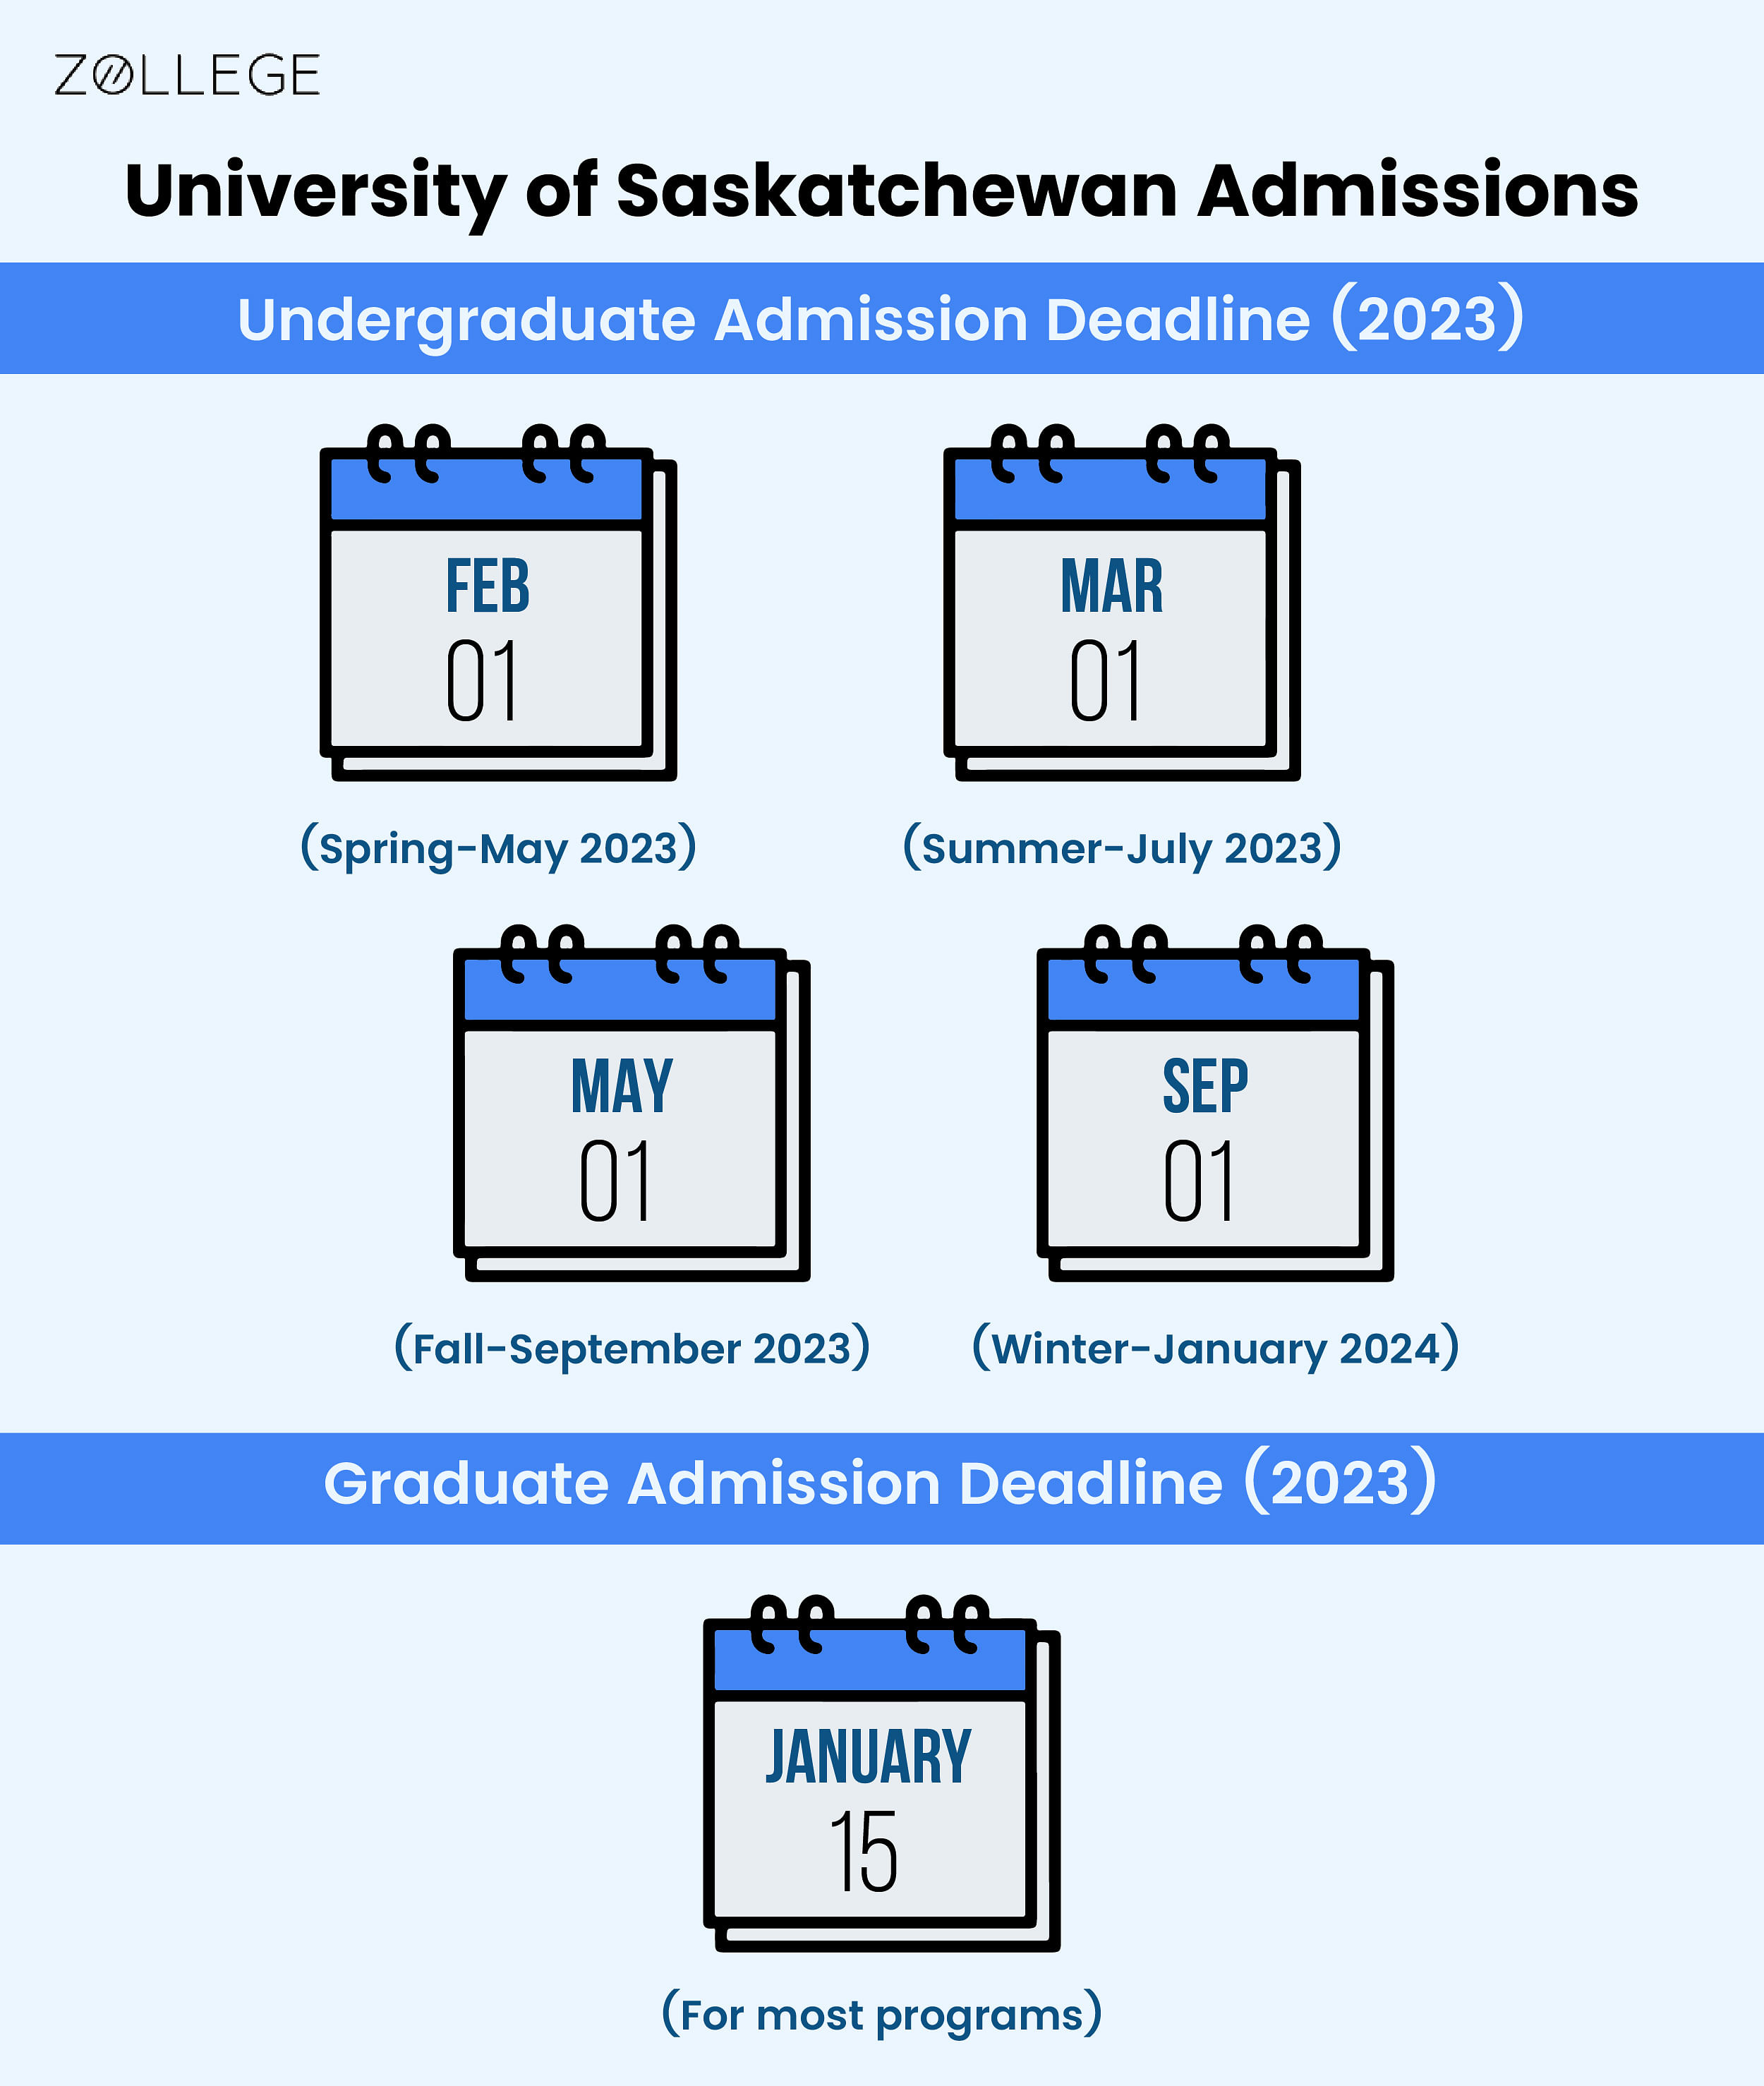 University of Saskatchewan Admissions Deadlines, Programs